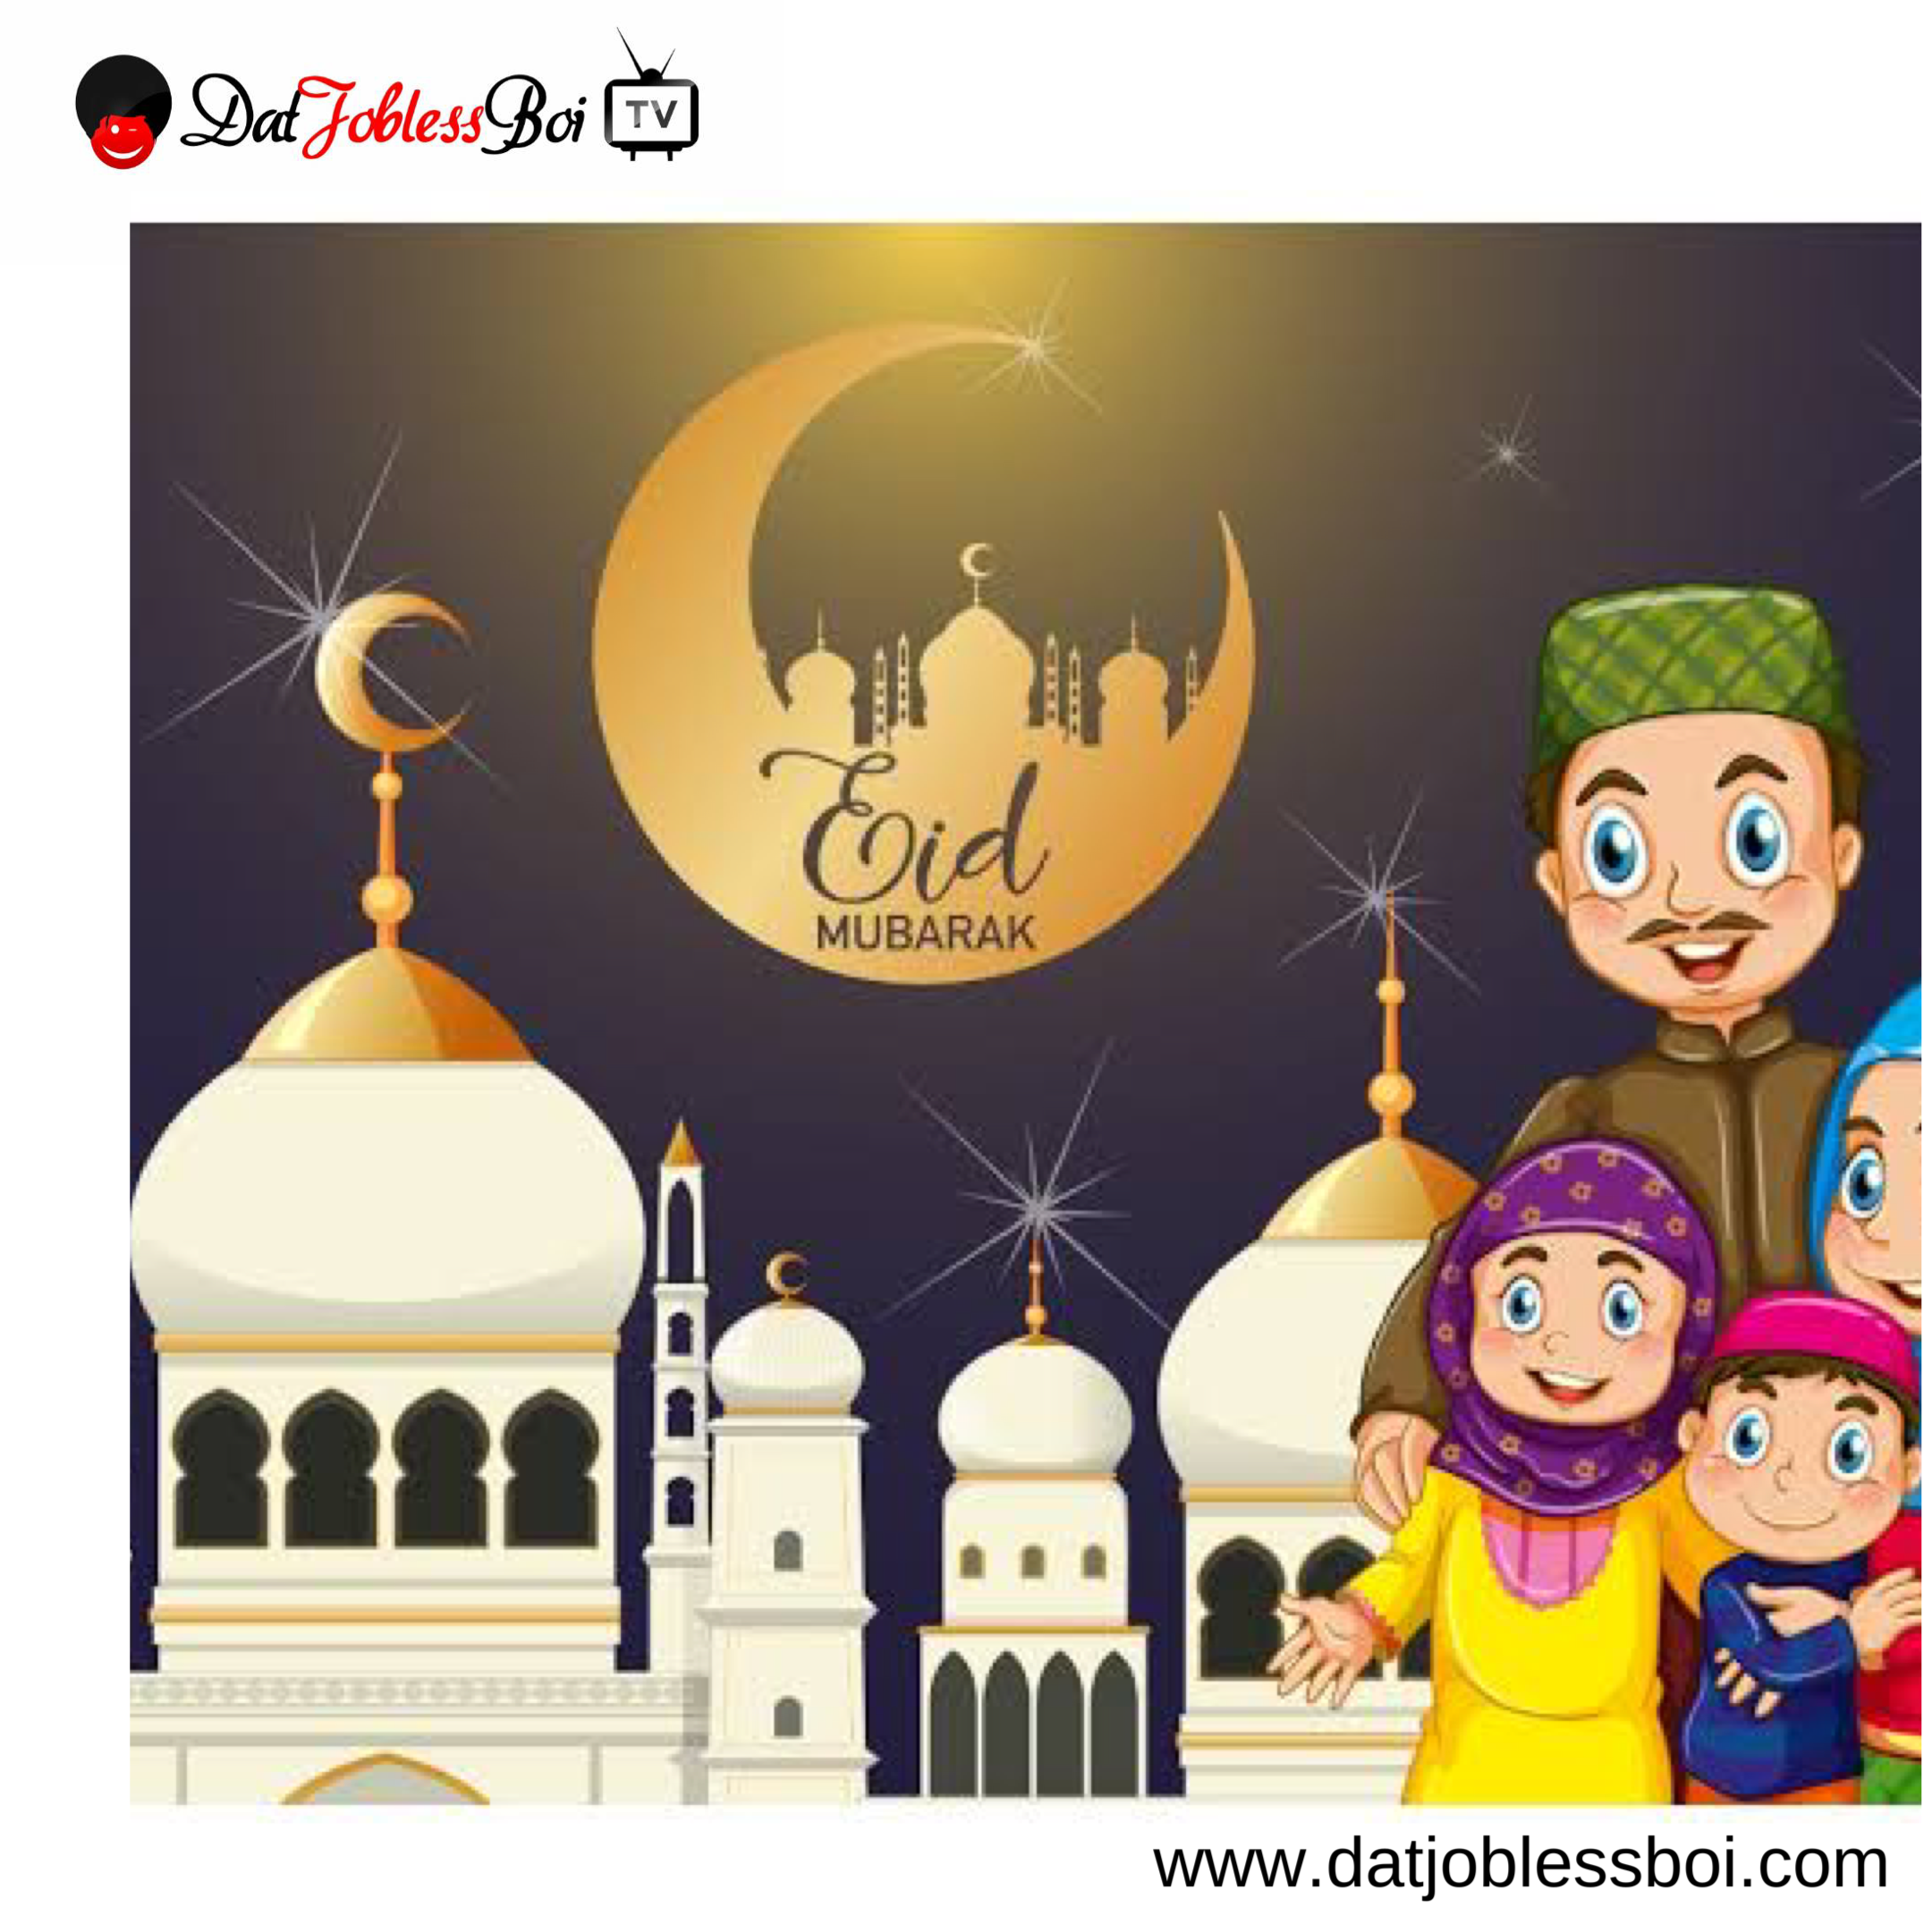 Happy Eid Mubarak to all Datjoblessboi Lovers!